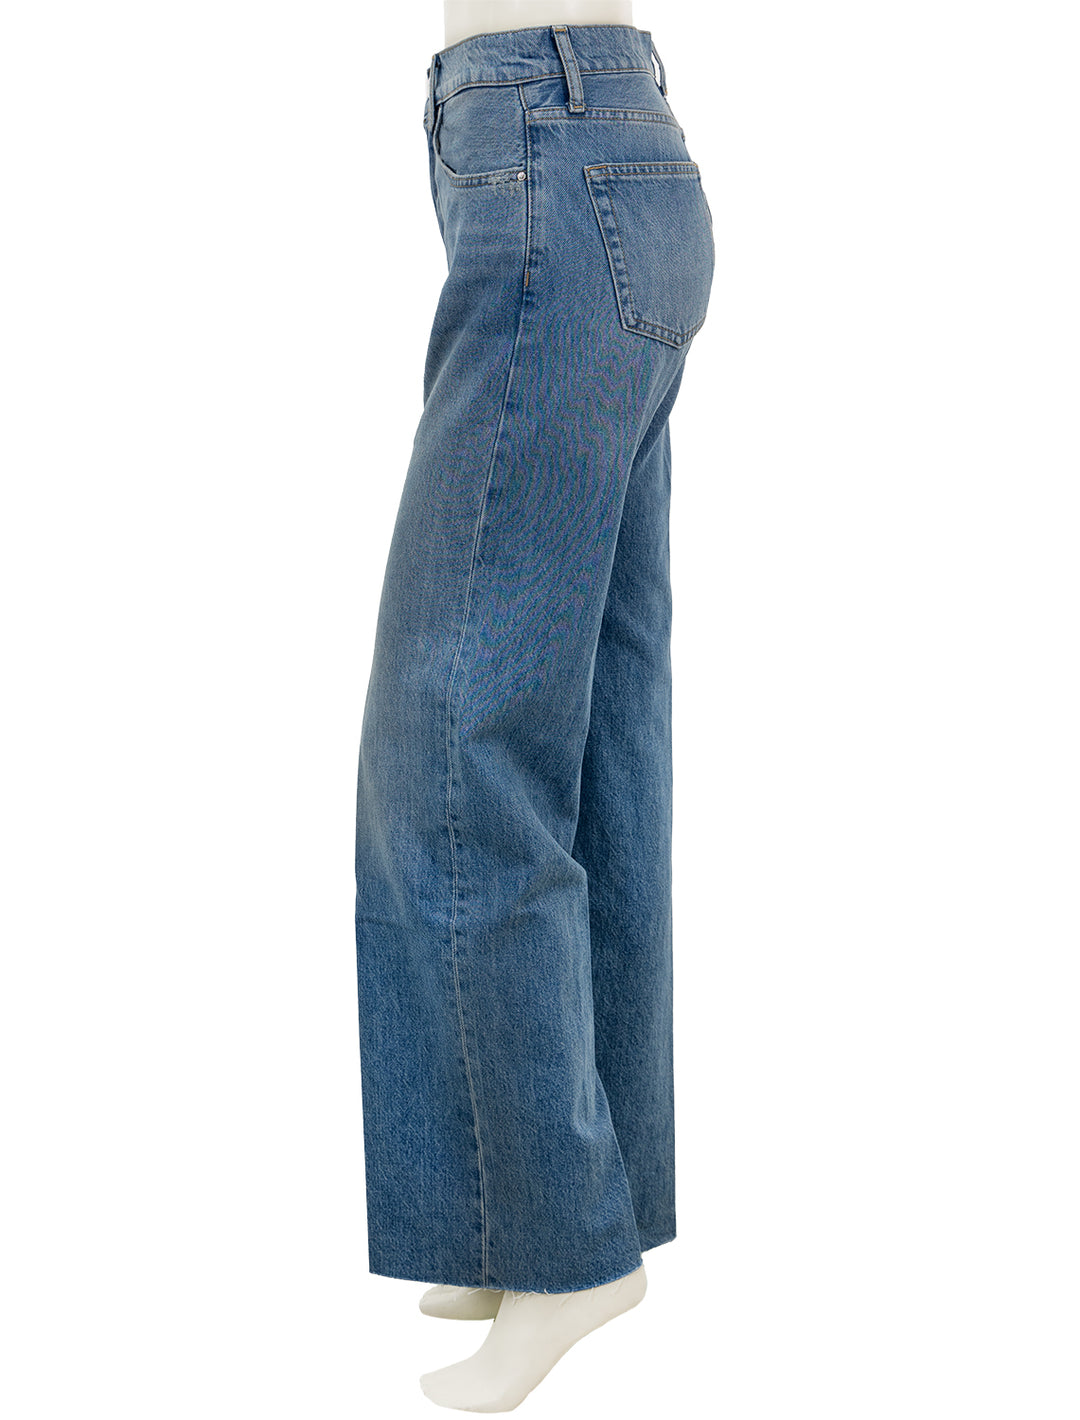 Side view of Anine Bing's hugh jean in panama blue.